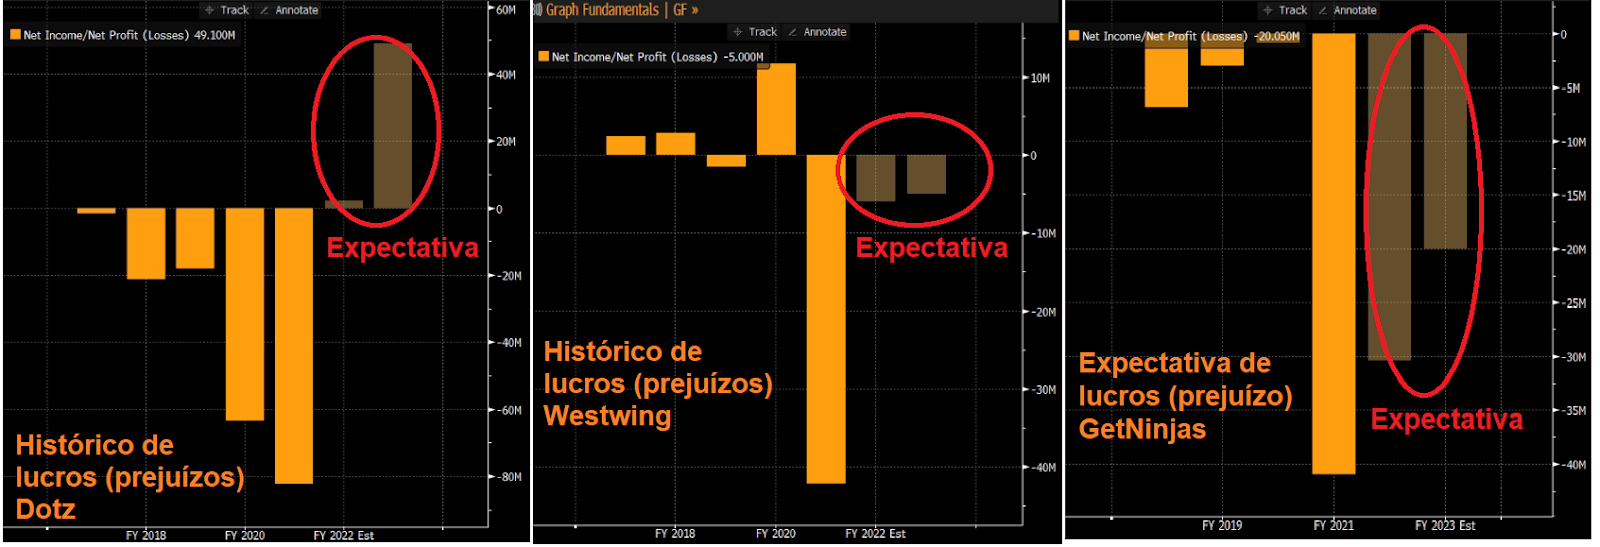 Expectativa Dotz, Westwing e GetNinjas. Fonte: Bloomberg.